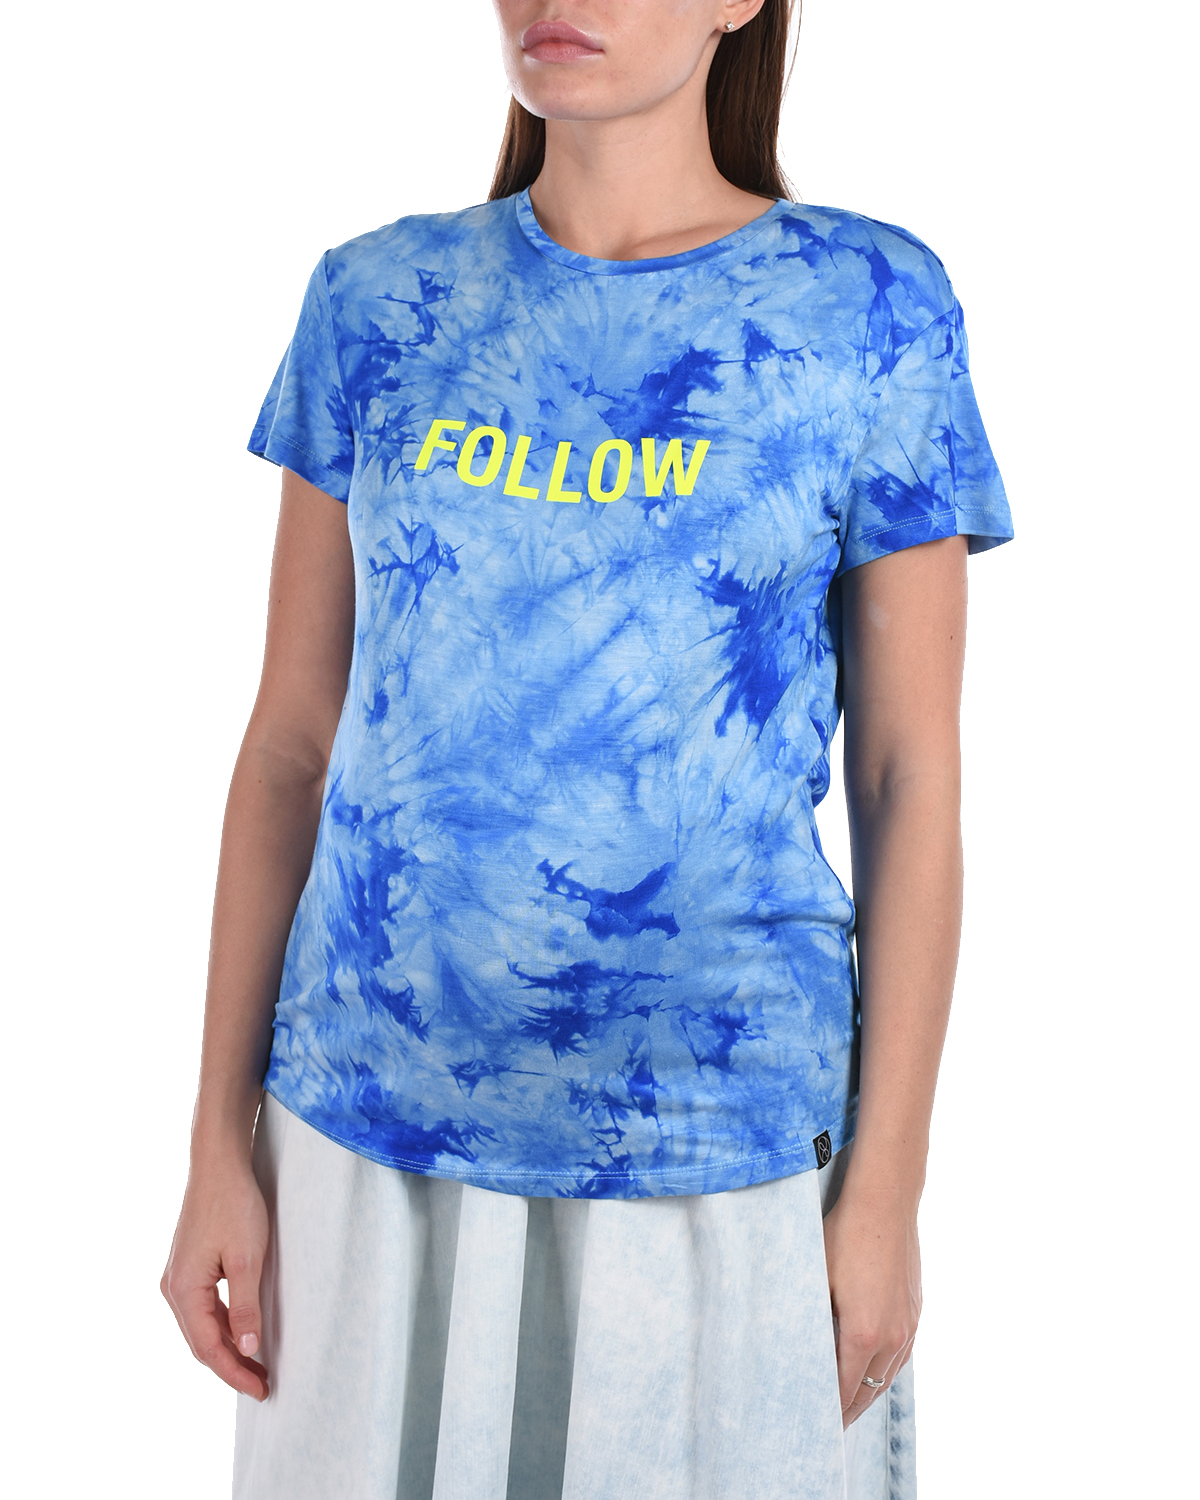 Синяя футболка с надписью "FOLLOW" Dan Maralex, размер 44, цвет нет цвета - фото 7